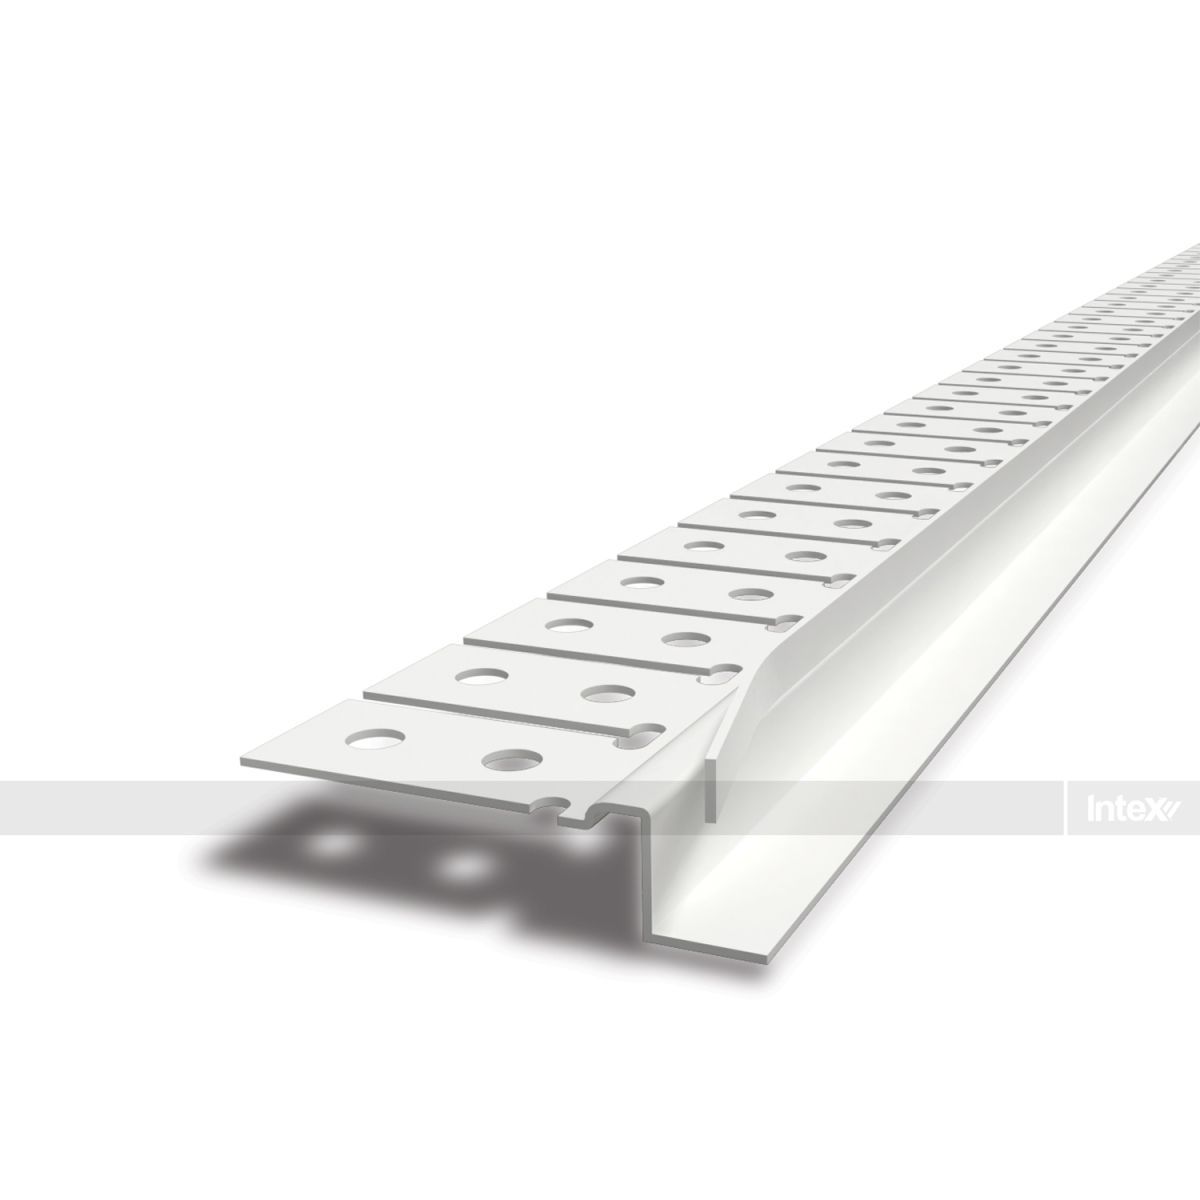 TrimTex 10mm PVC Shadowline Arch Bead with Tearaway Strip x 3m
